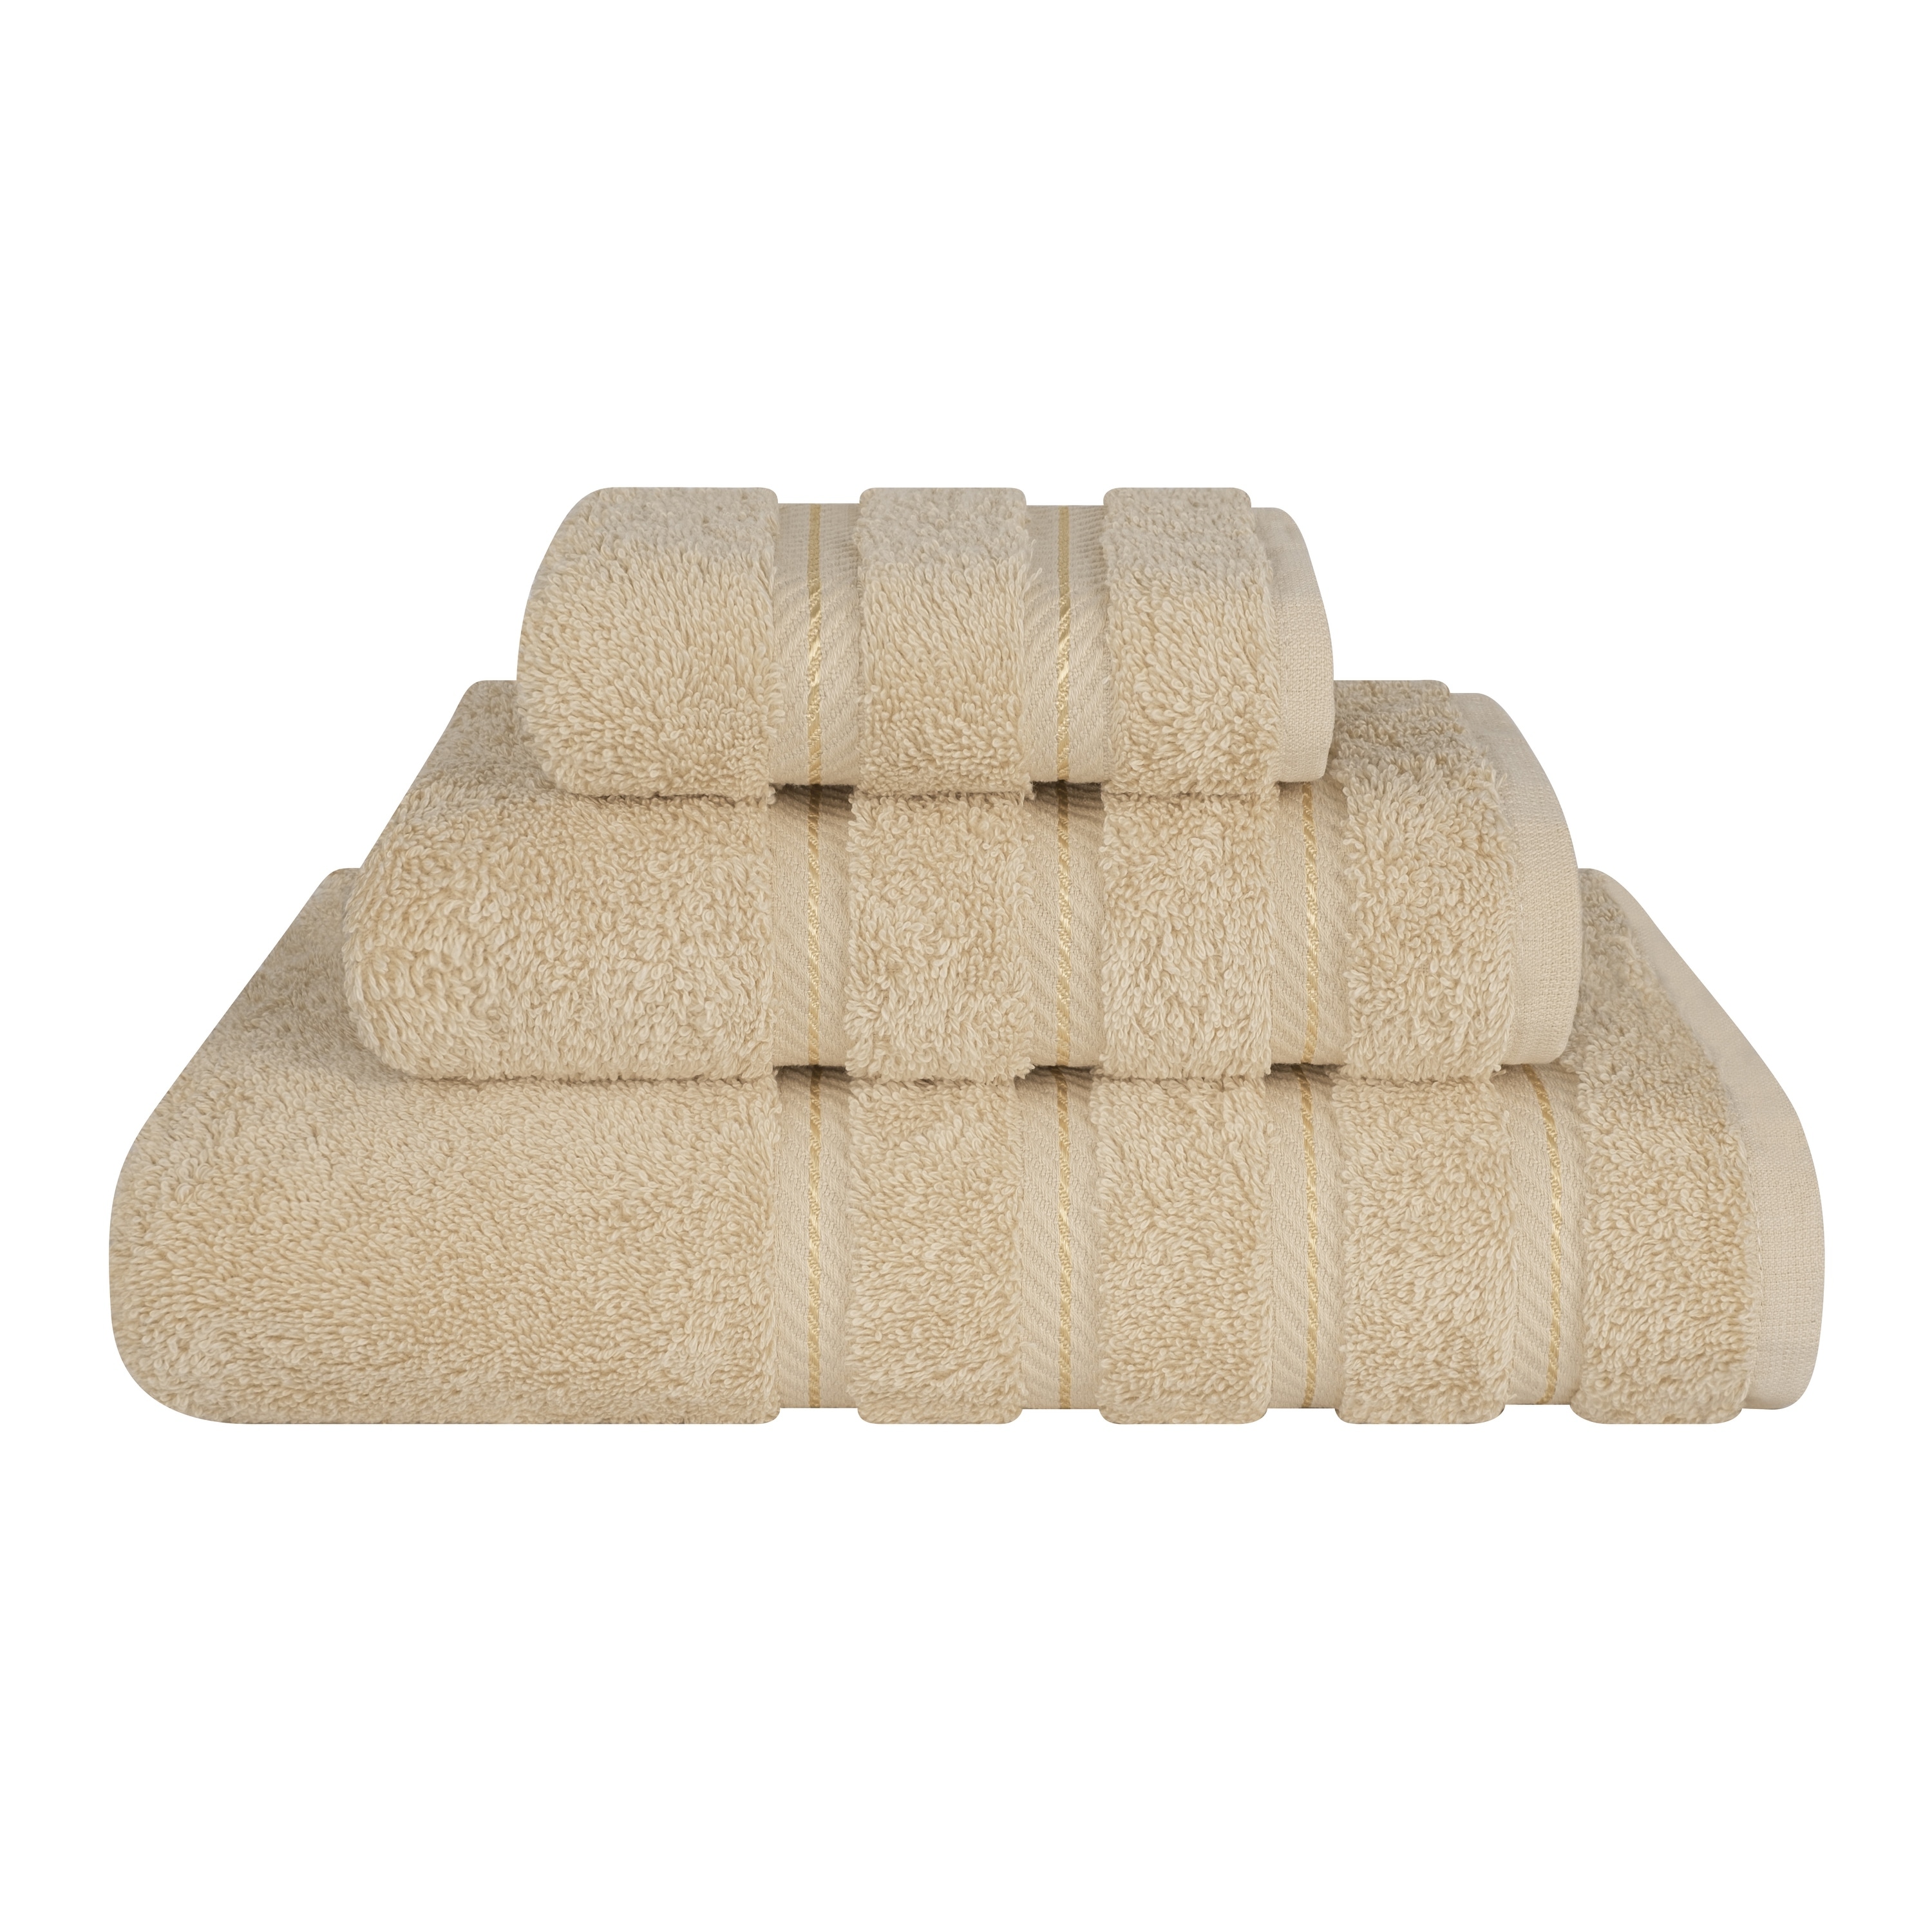 https://ak1.ostkcdn.com/images/products/is/images/direct/4b04e5b67a05fdc57d0afb96844a73be5e71b0c2/American-Soft-Linen-3-Piece%2C-100%25-Genuine-Turkish-Cotton-Premium-%26-Luxury-Towels-Bathroom-Sets.jpg